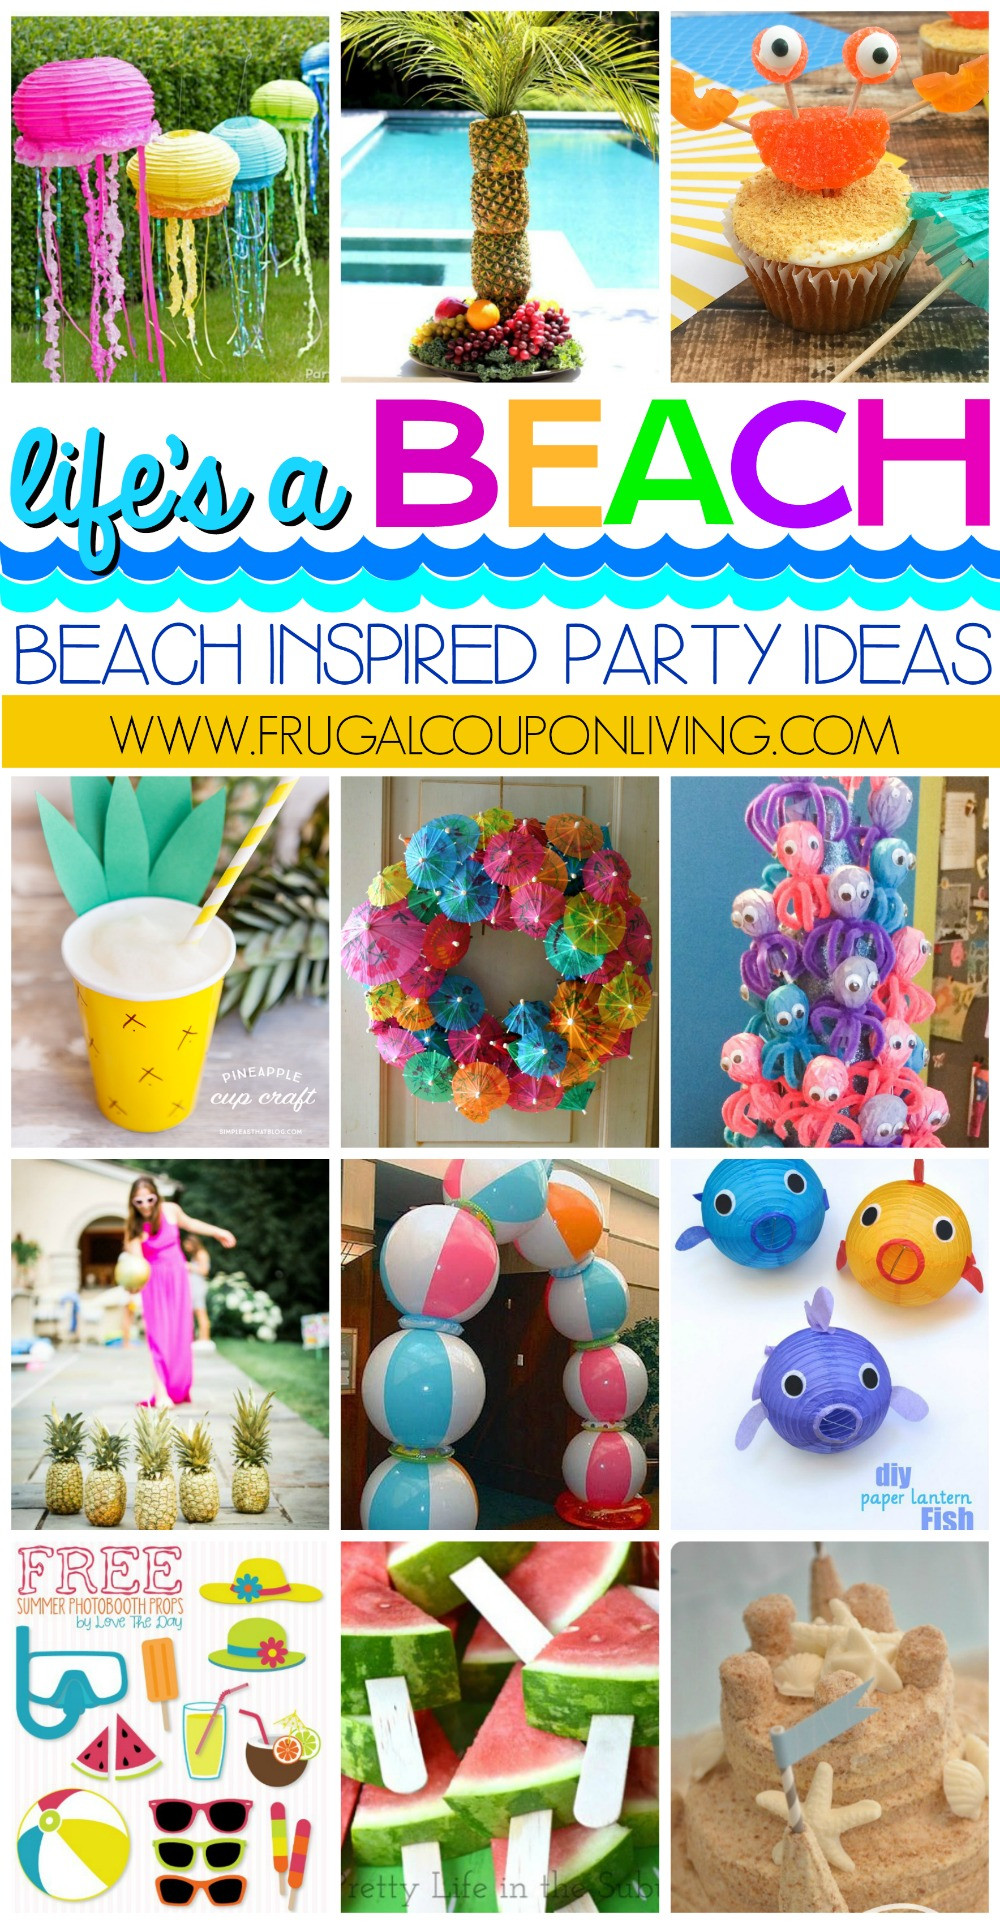 Pinterest Beach Party Food Ideas
 Beach Inspired Party Ideas